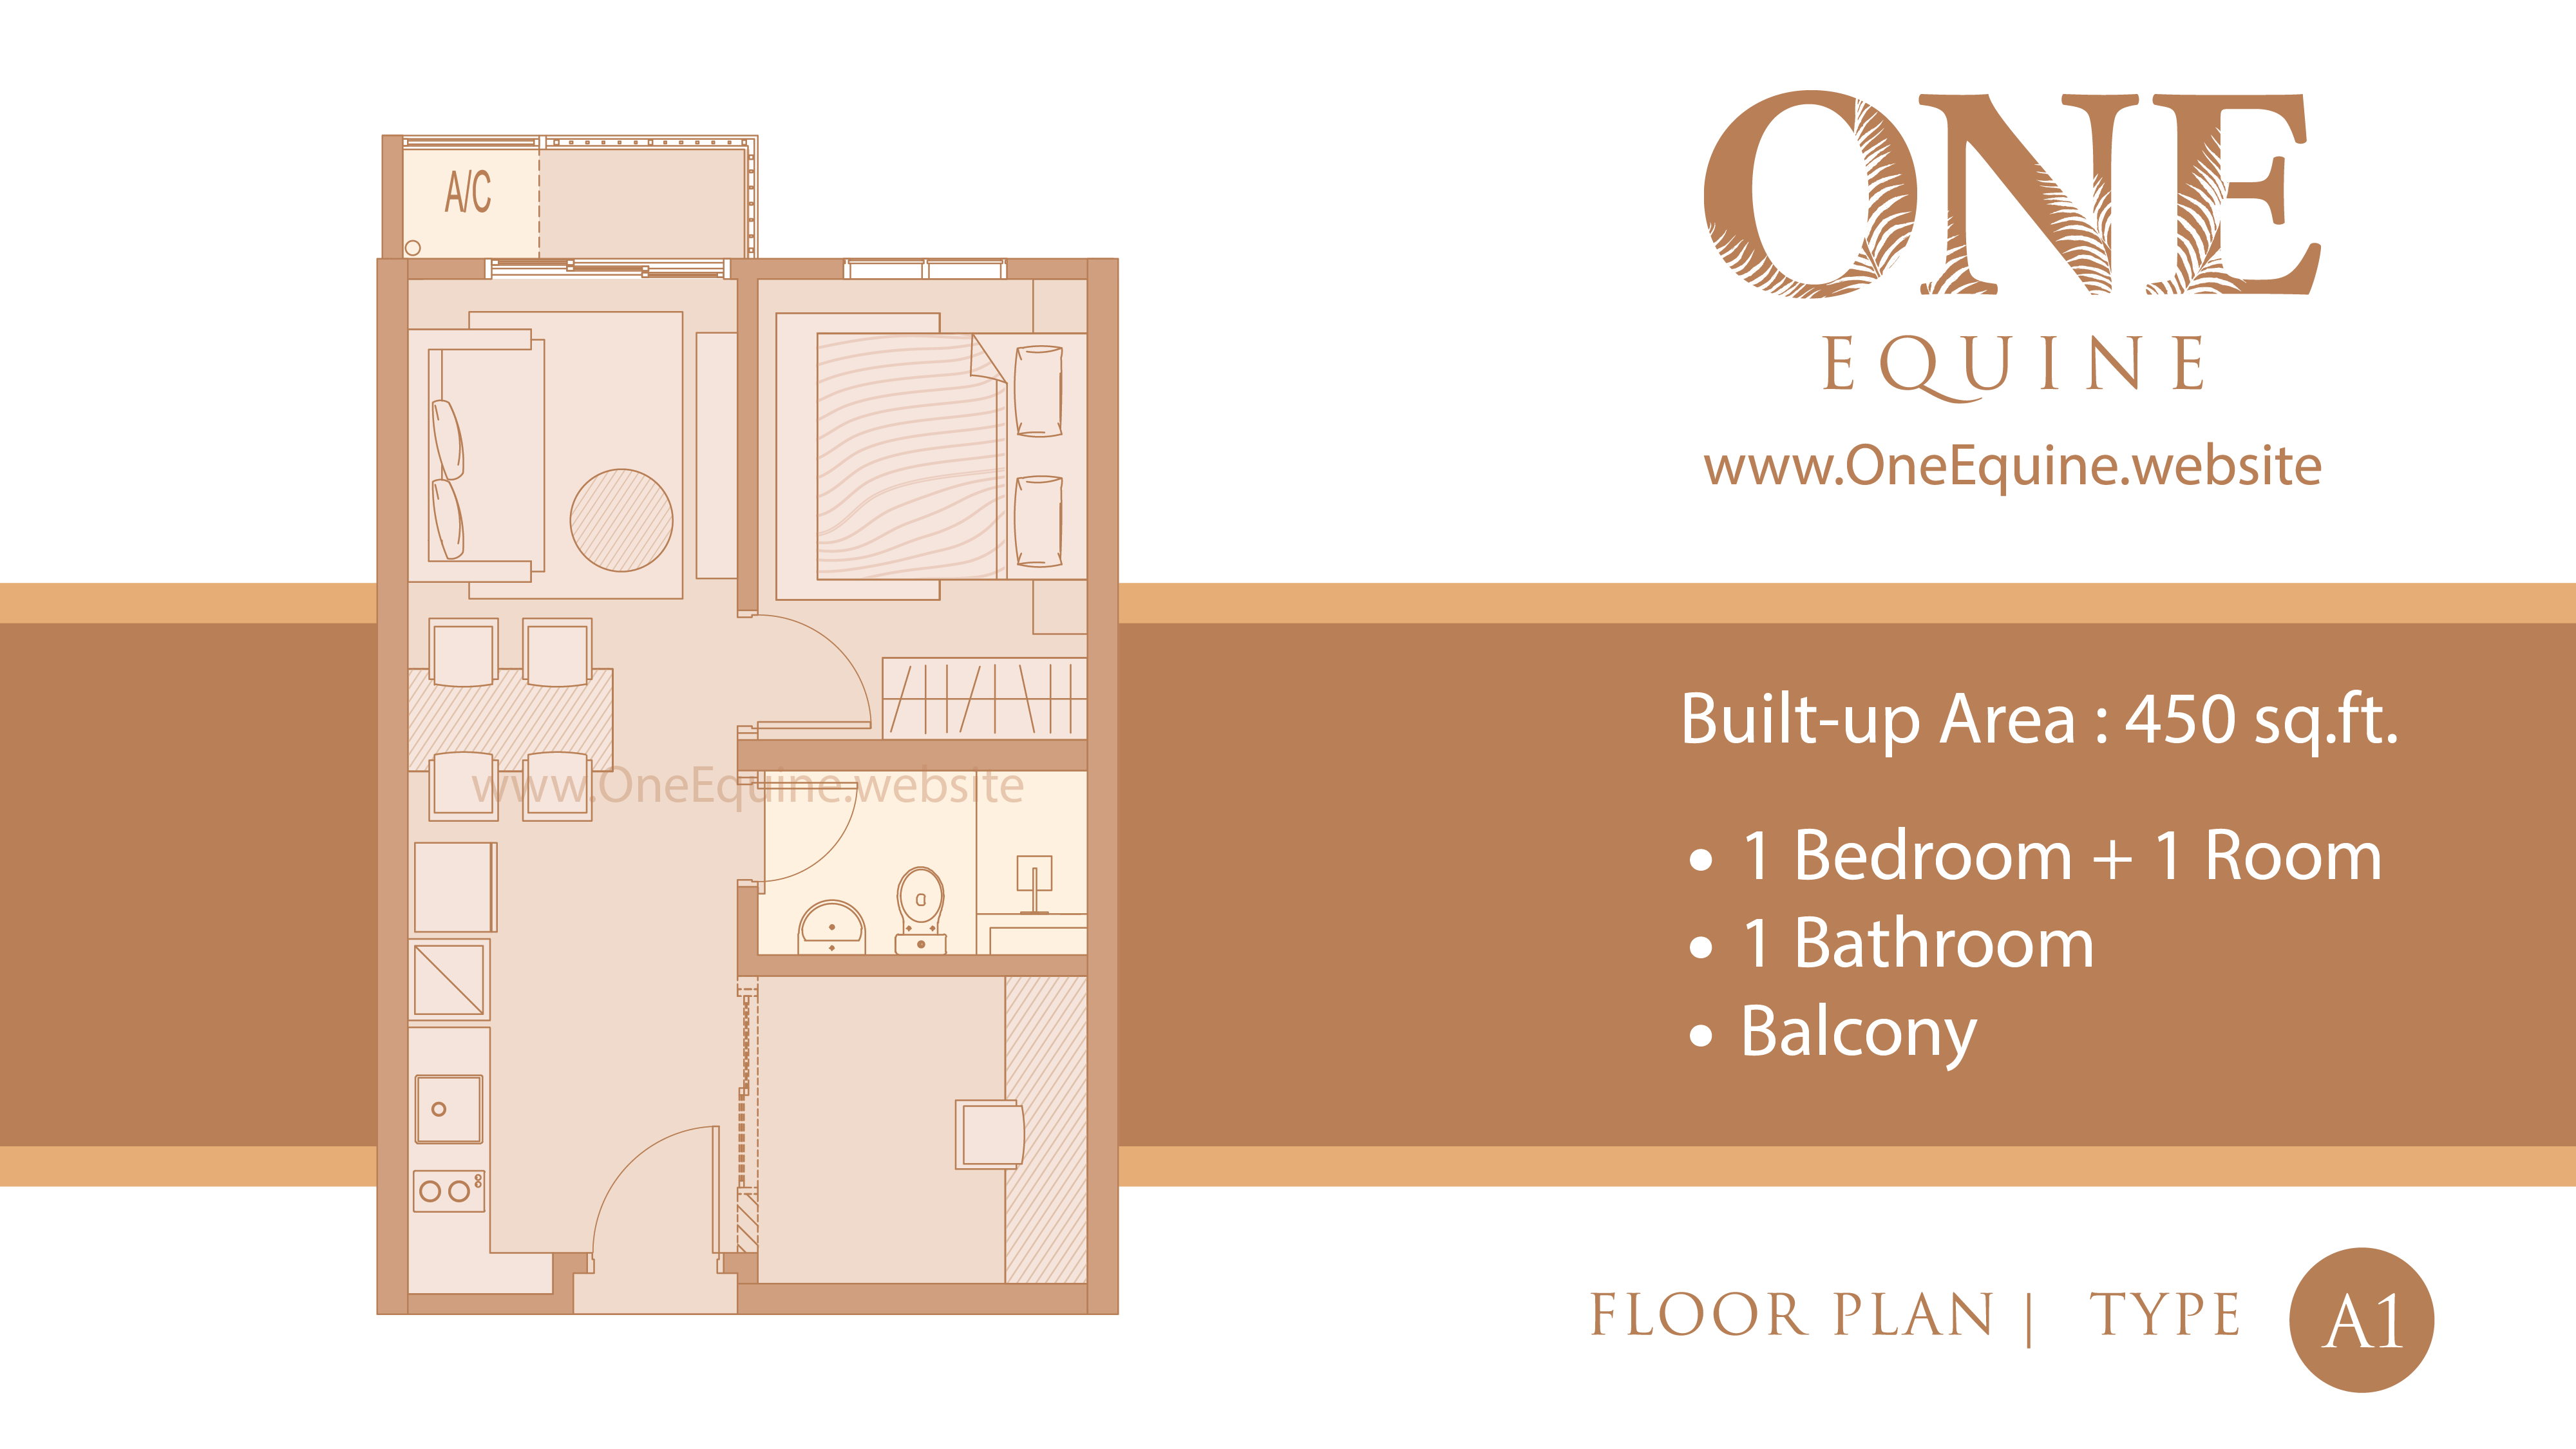 One Equine Park Seri Kembangan - SOHO 1 Bedroom 1 Room 1 Bathroom Balcony - Floor Plan Type A1 - 450 sqft